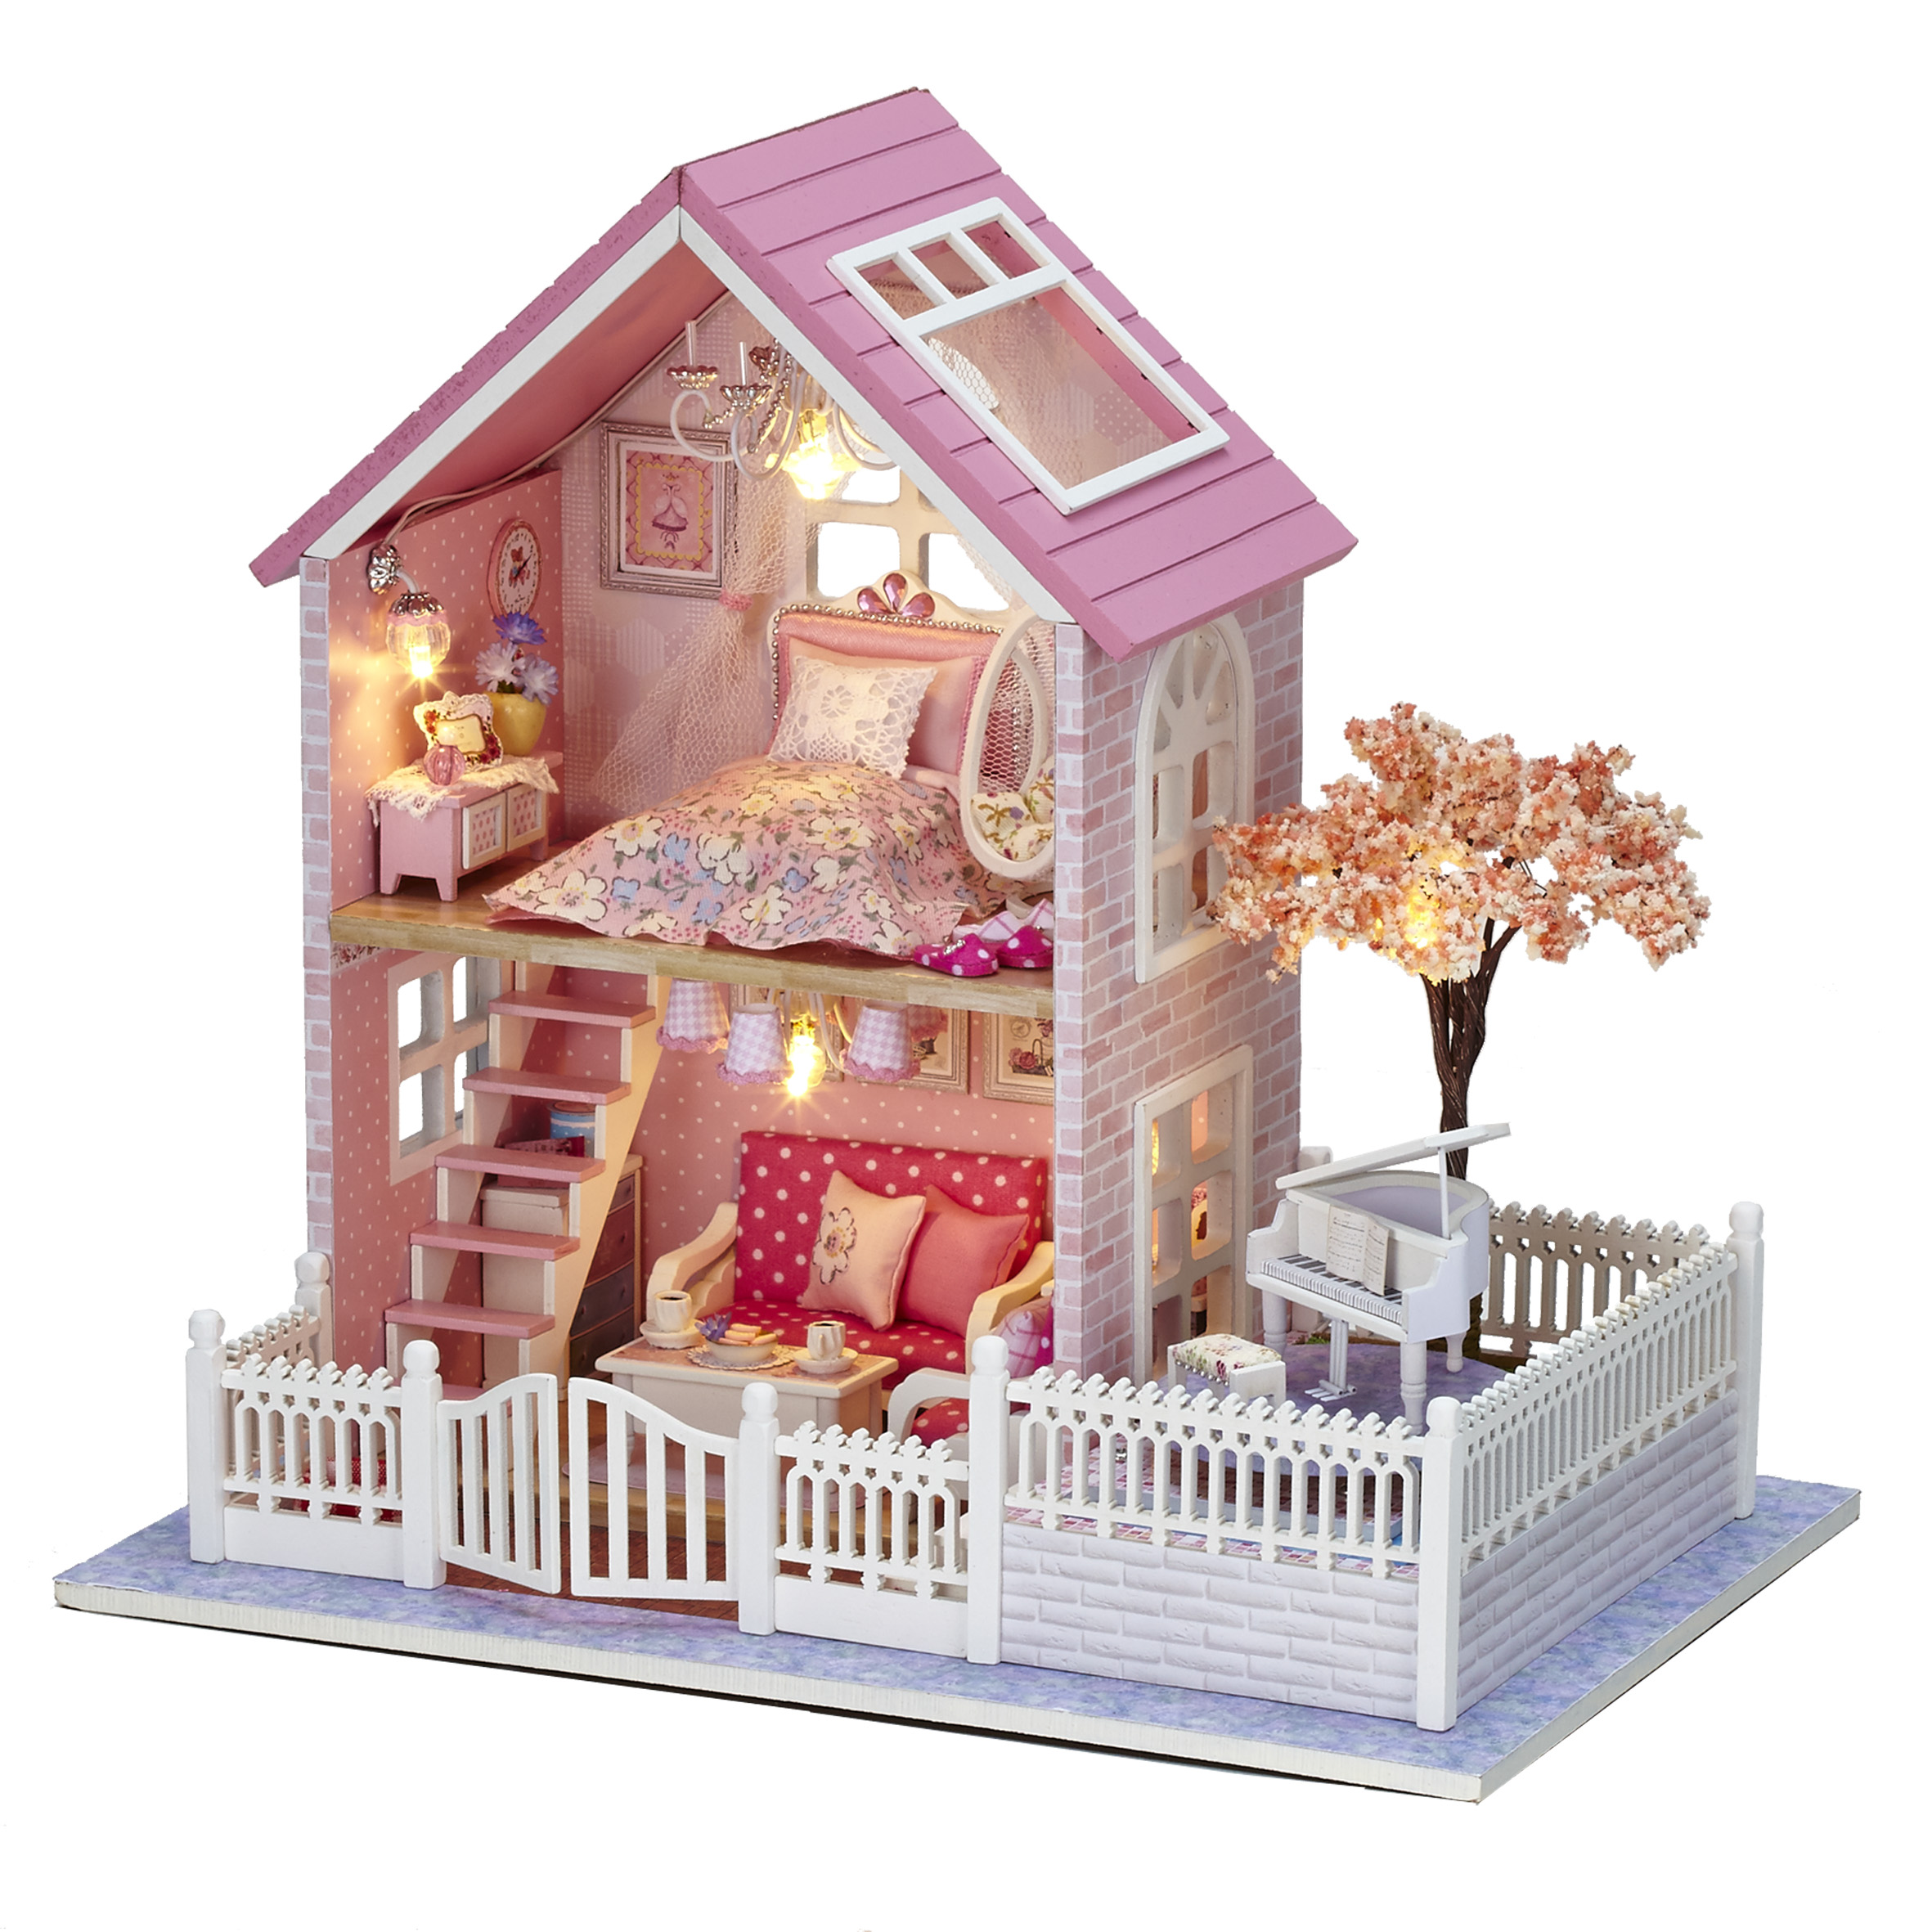 Cuteroom-124-DIY-Wooden-Dollhouse-Pink-Cherry-Handmade-Decorations-Model-with-LED-LightMusic-Birthda-1068341-2